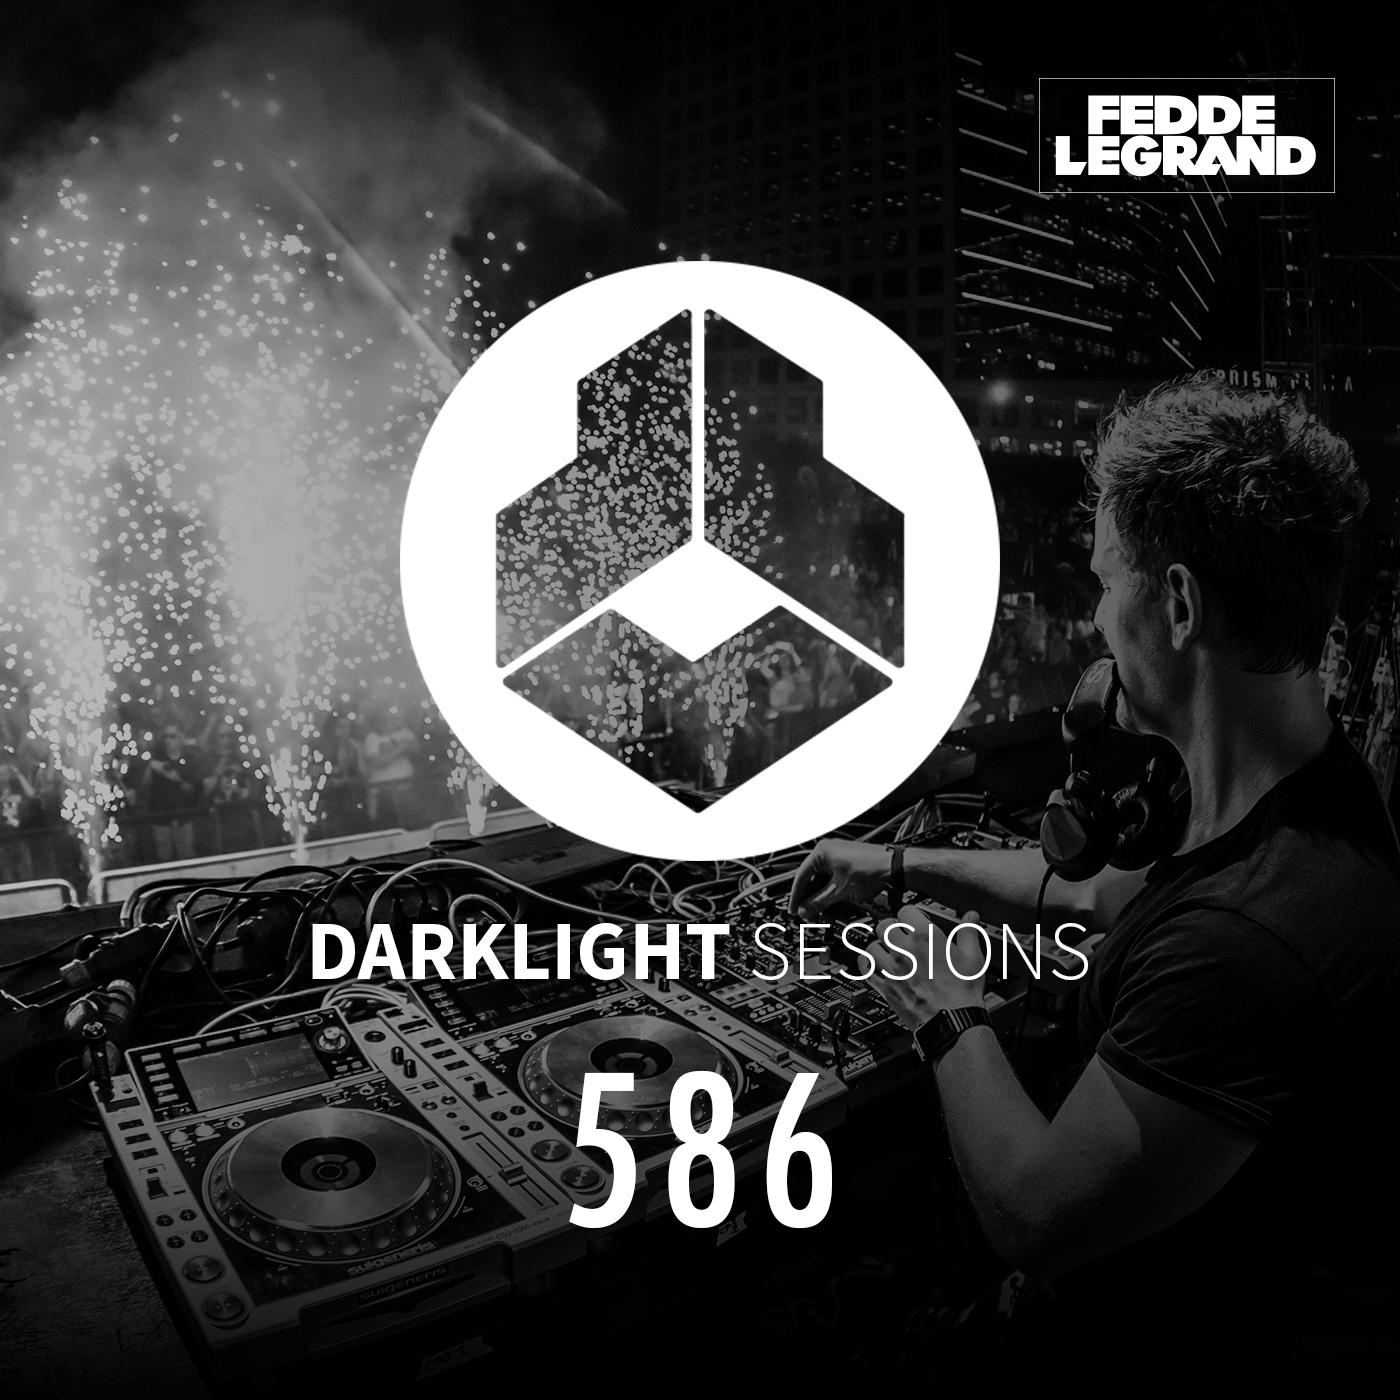 Darklight Sessions 586